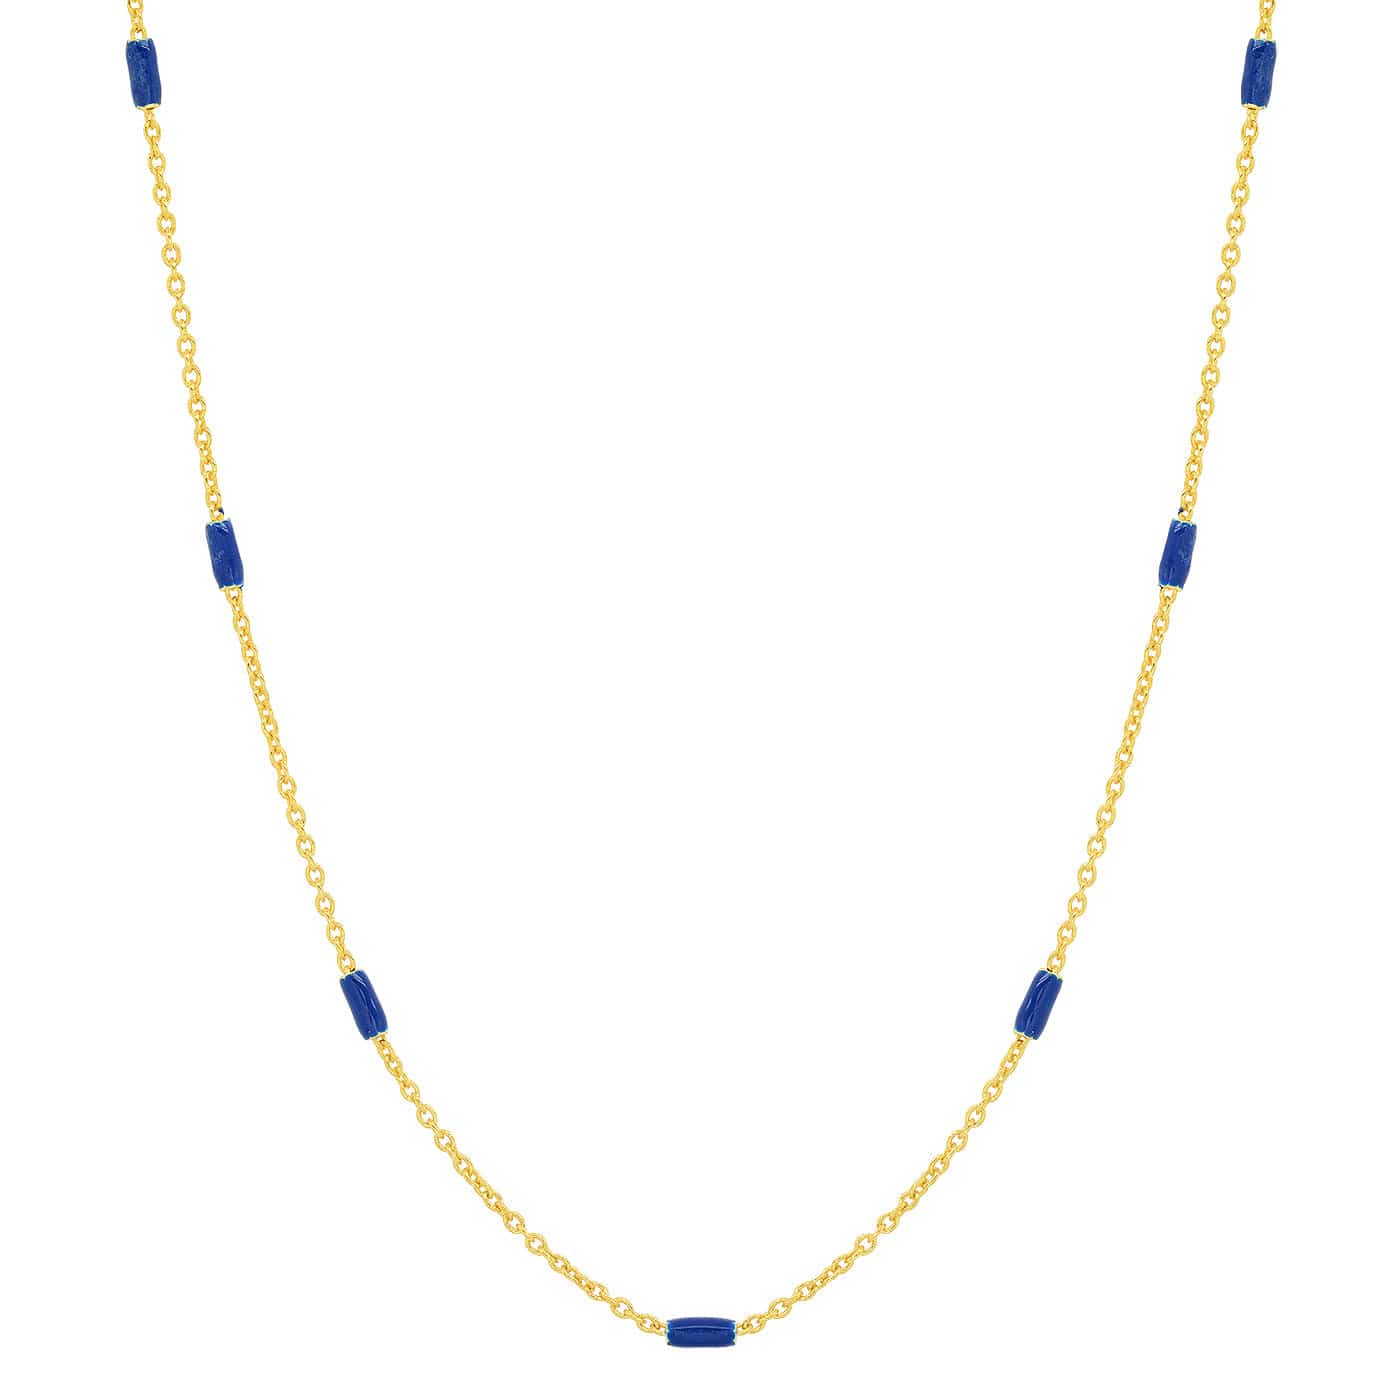 TAI JEWELRY Necklace Navy Enamel Bead Chain